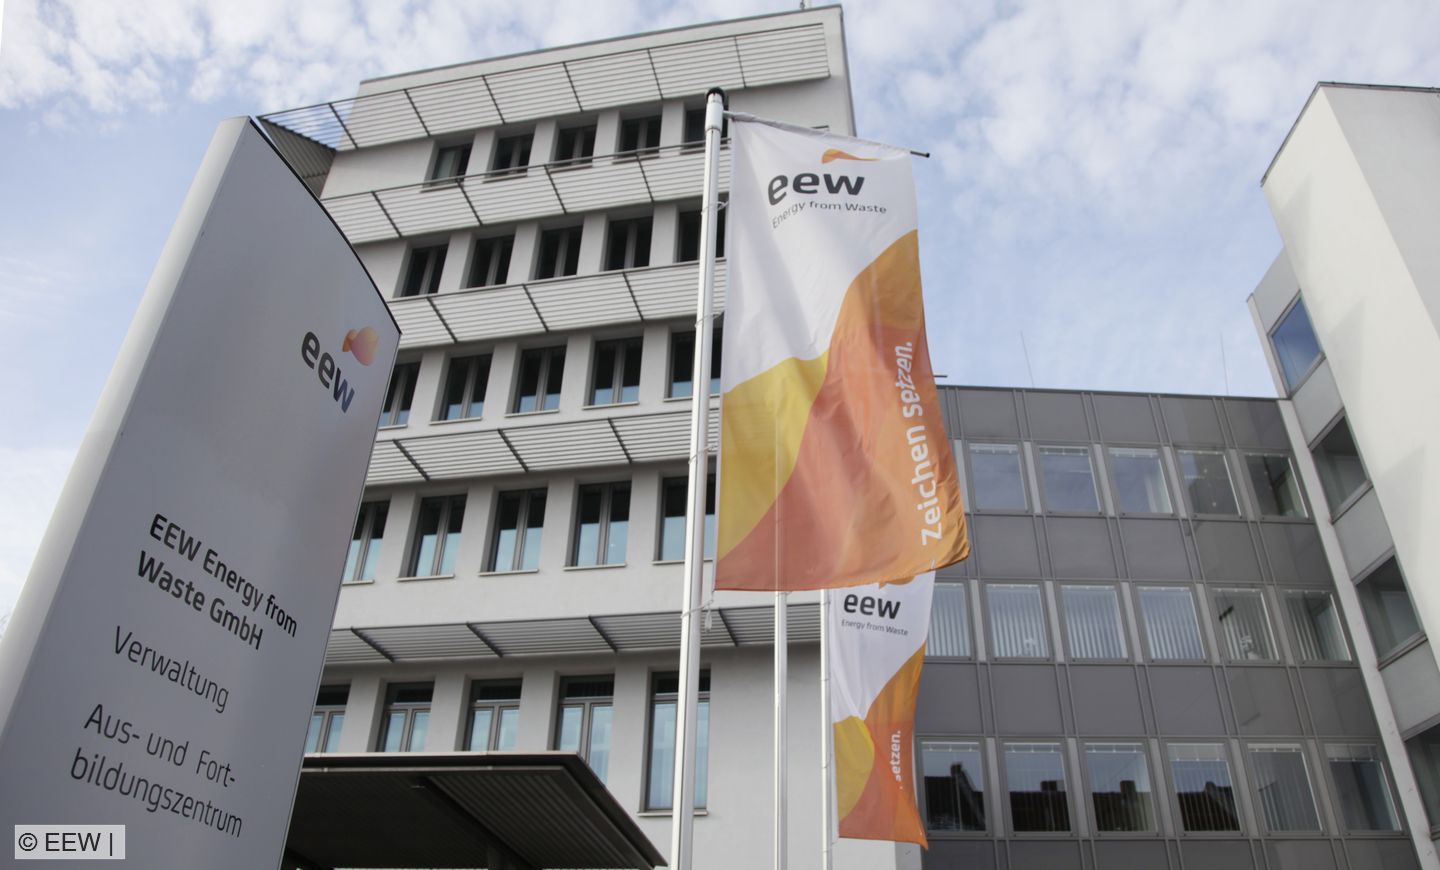 EEW's headquarters in Helmsted, Germany